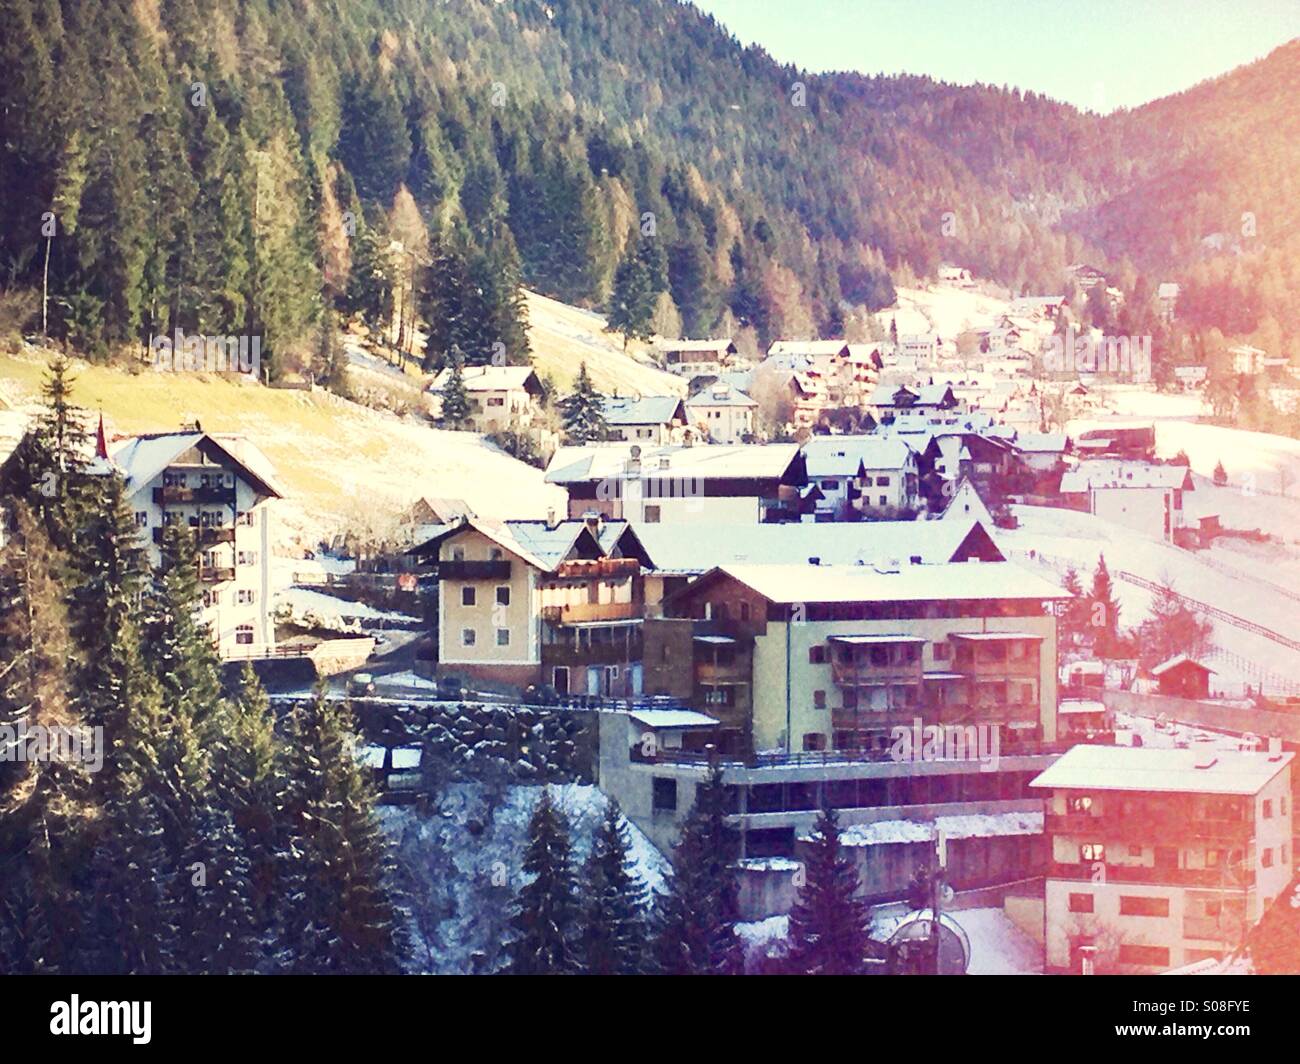 Winter in Welschnofen/Nova Levante, Trentino Alto Adige/ Südtirol, Italy Stock Photo